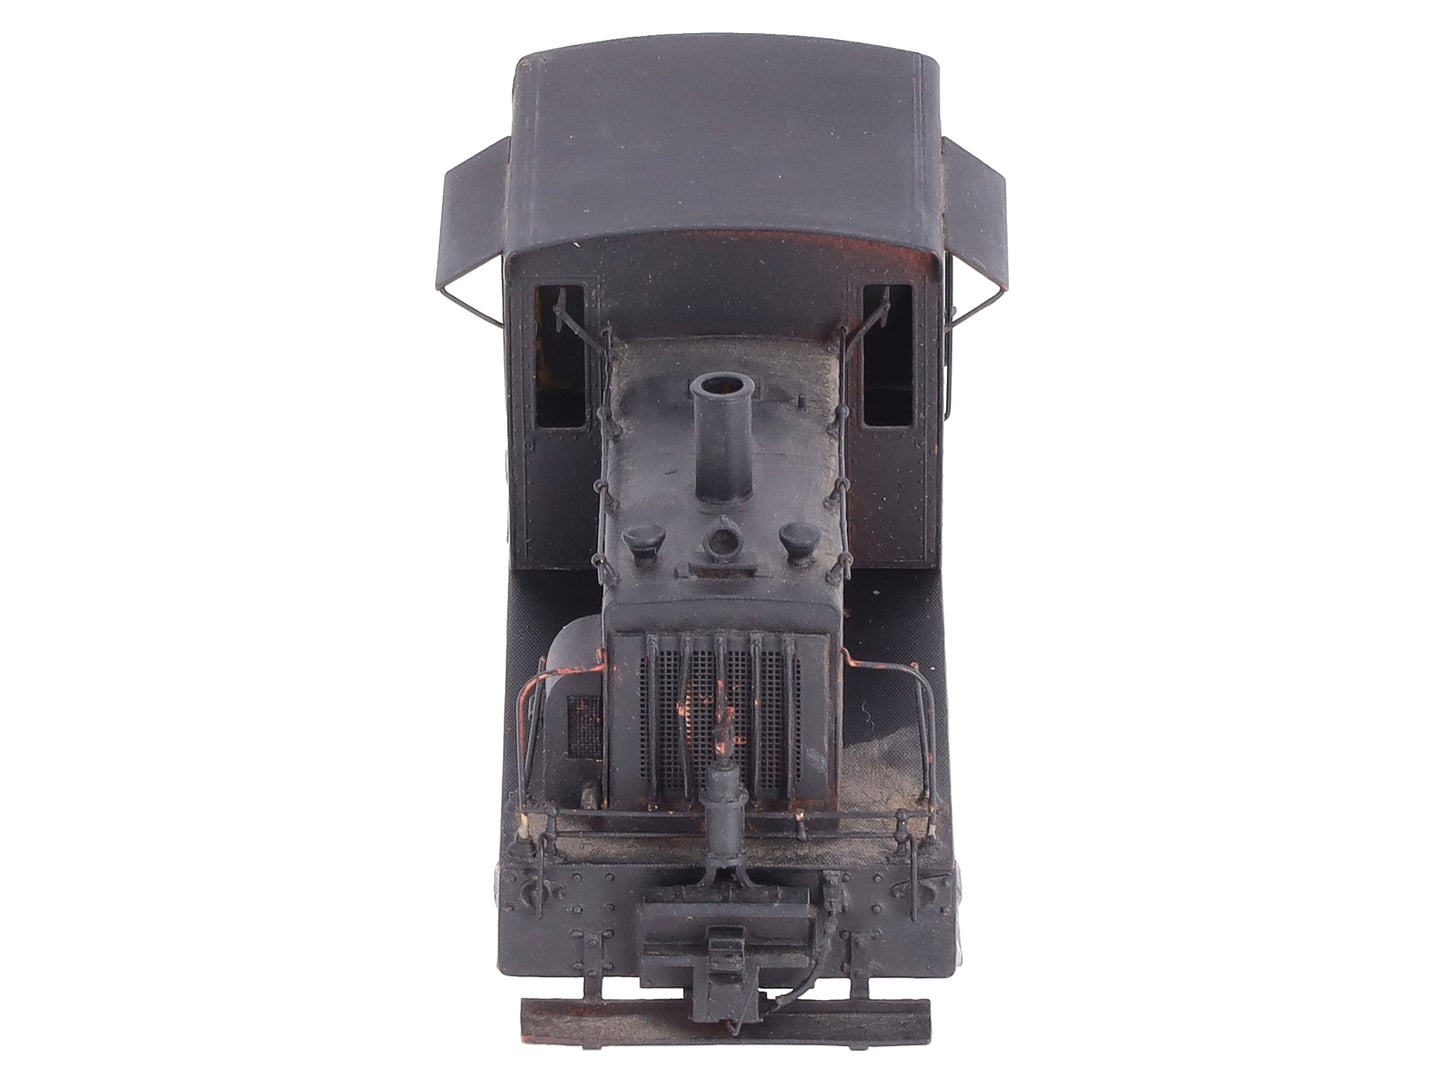 PBL Milestone Models Sn3 BRASS Custom D&RGW Diesel Switcher -Painted/Box